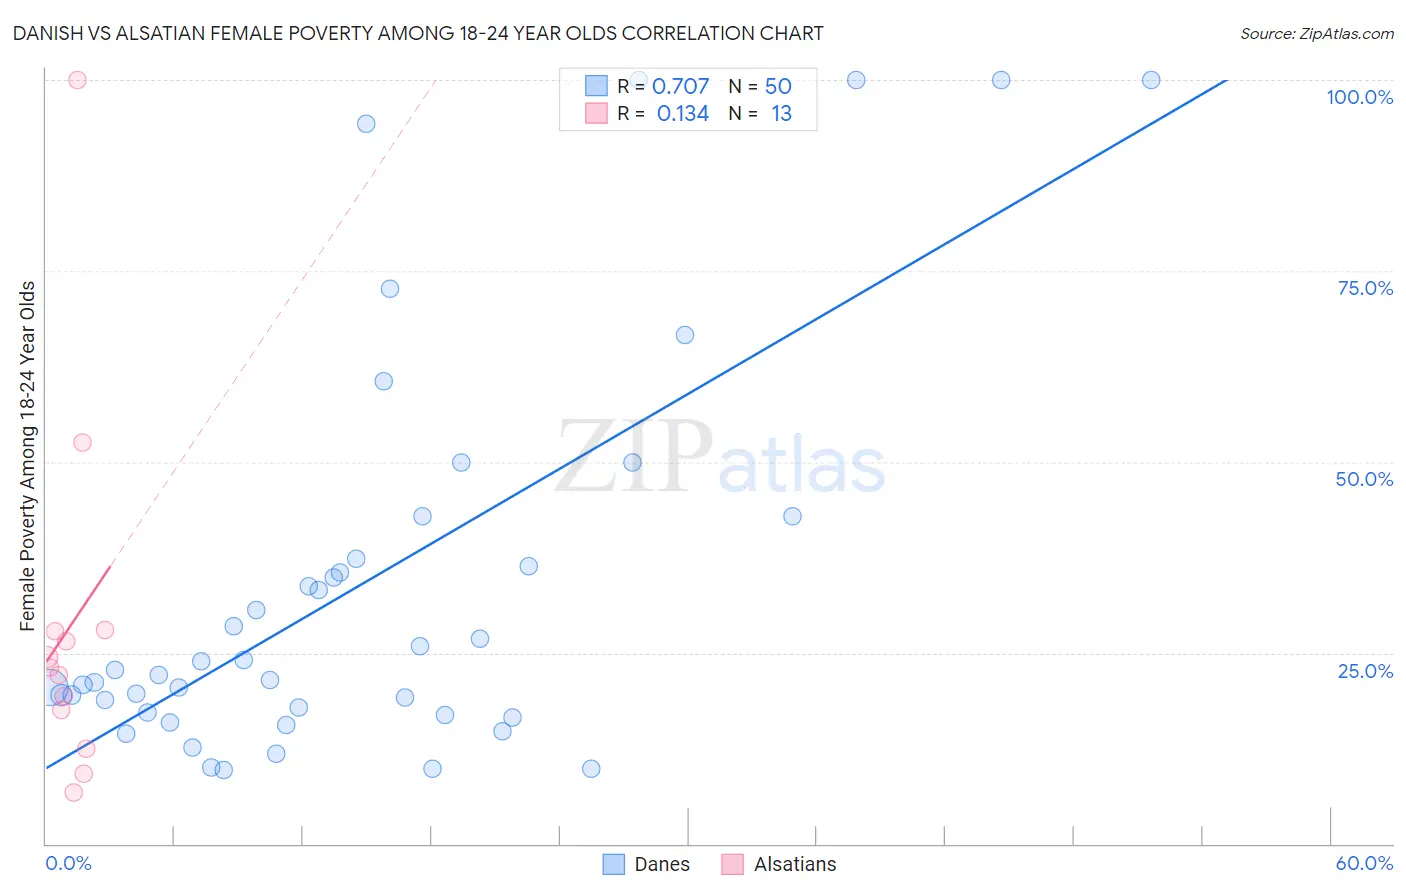 Danish vs Alsatian Female Poverty Among 18-24 Year Olds